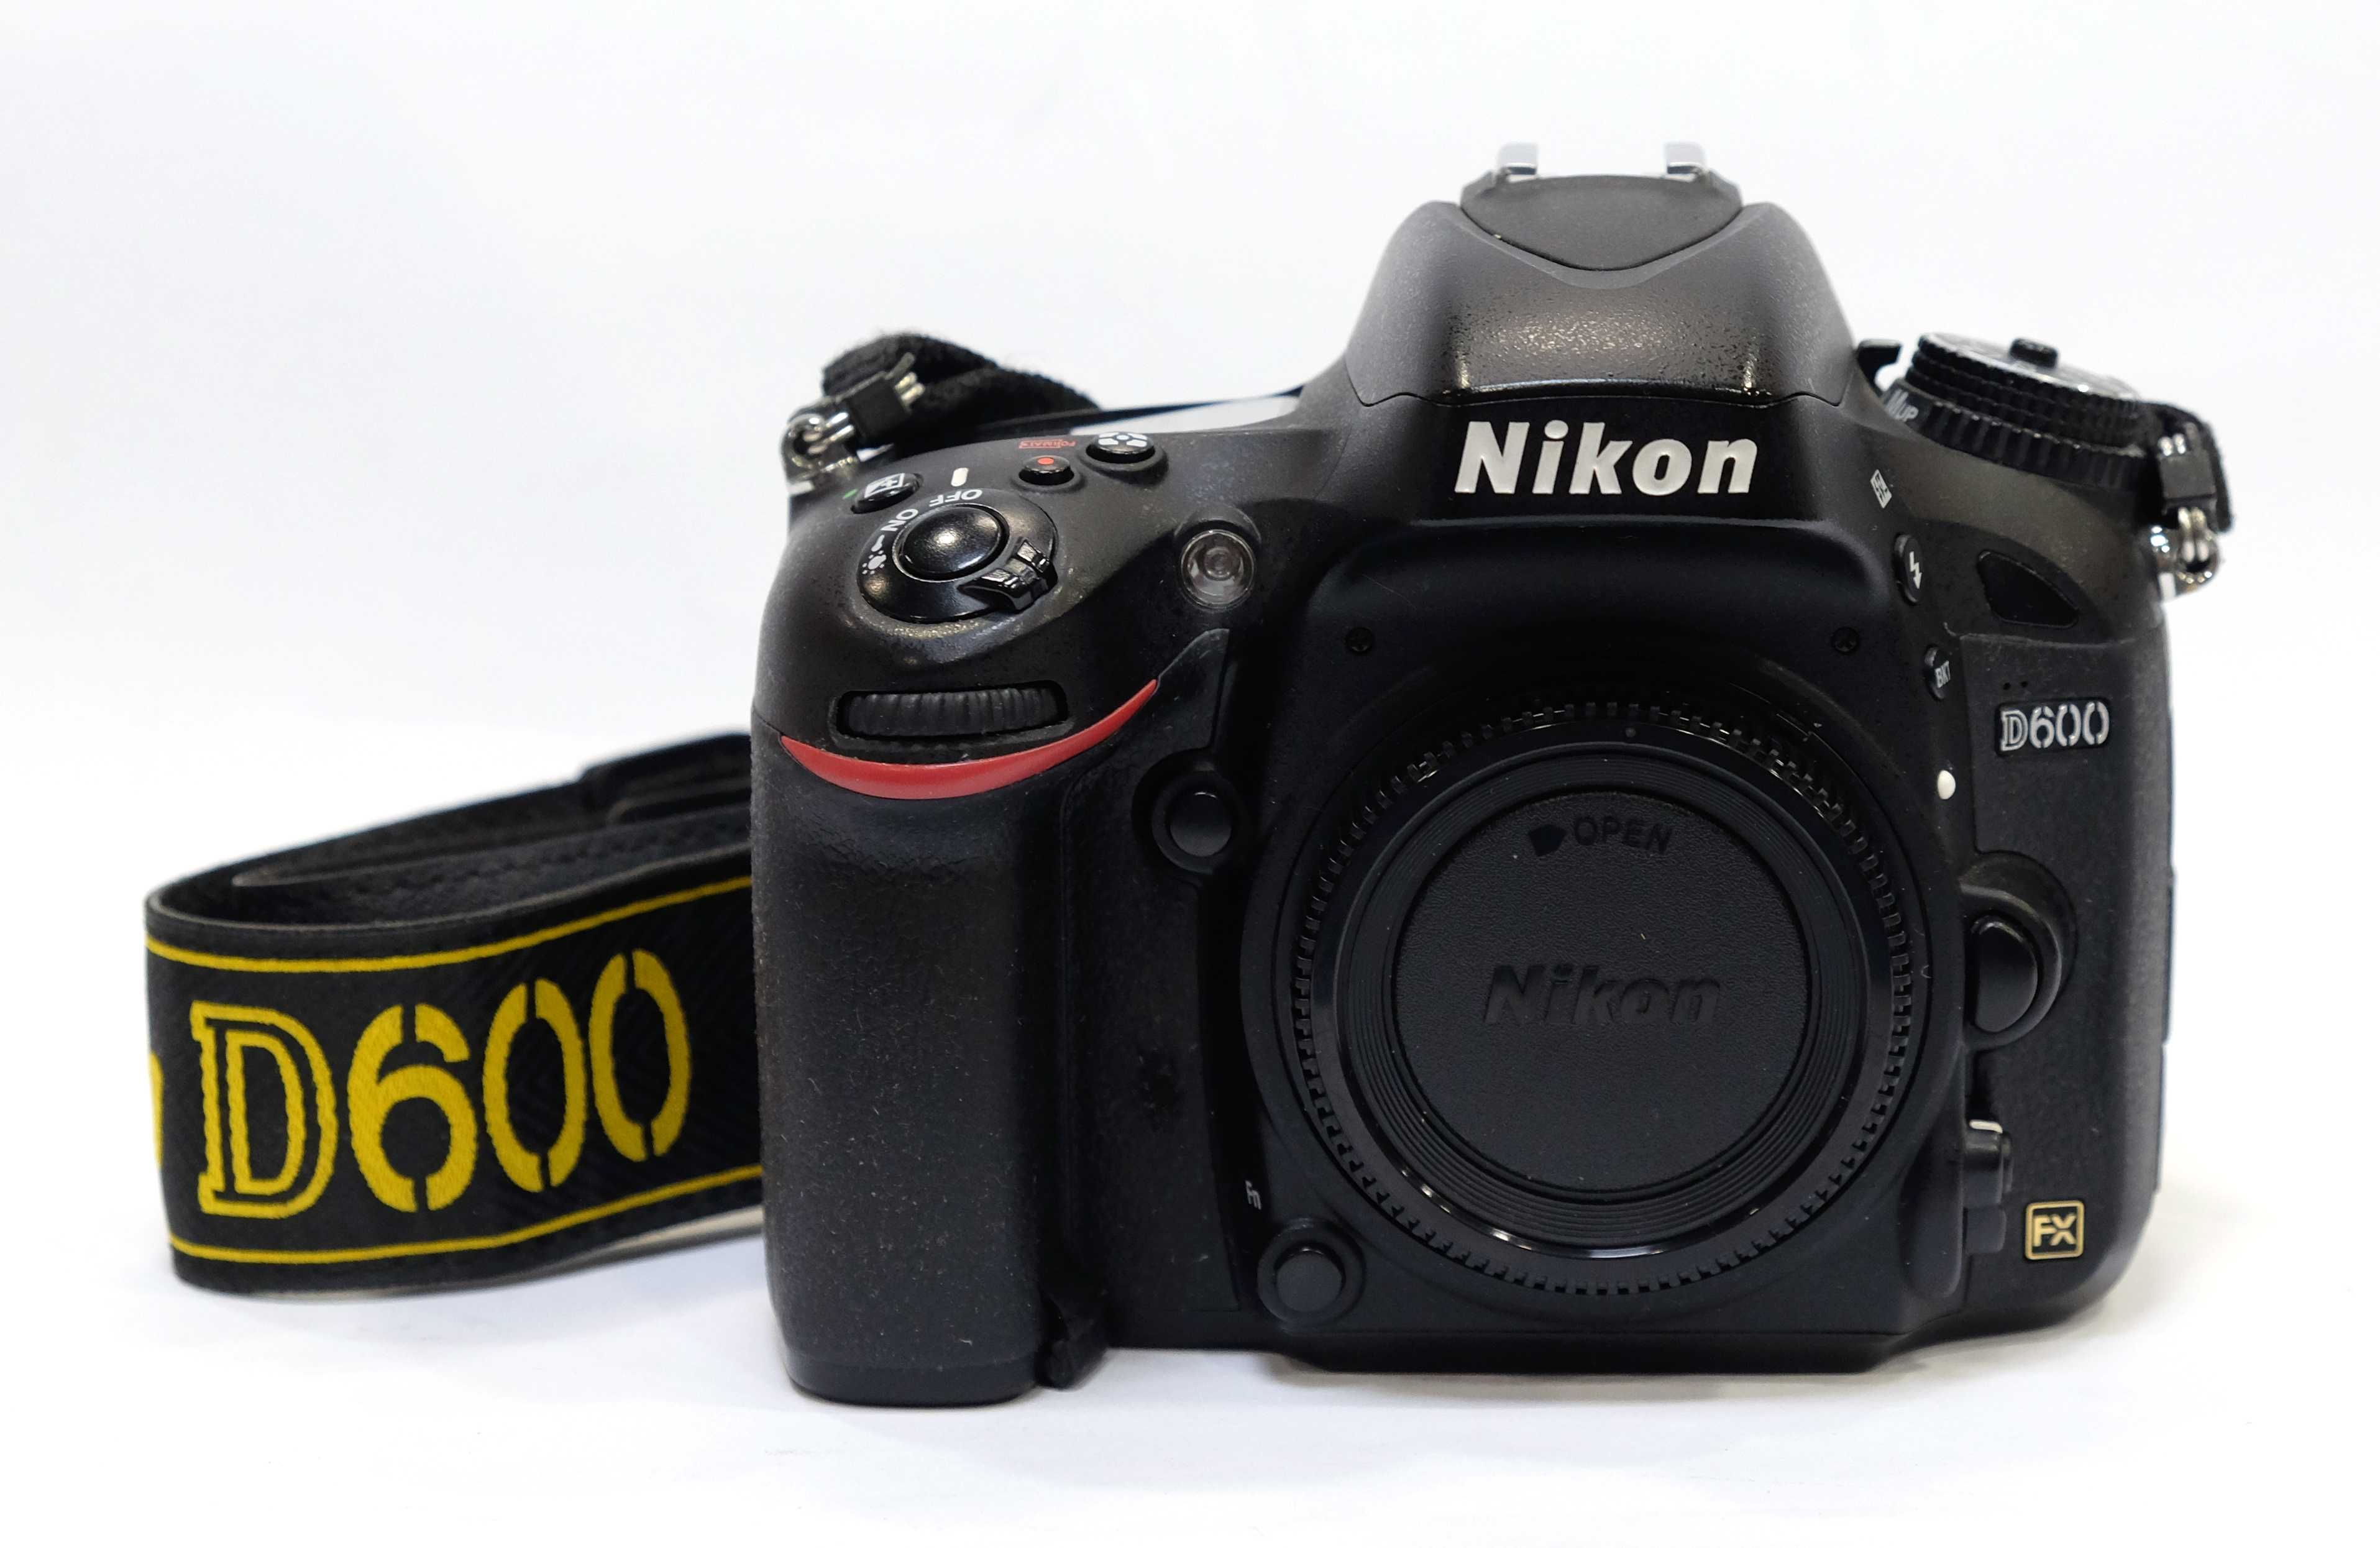 Aparat Nikon D600 - body. Gwarancja!